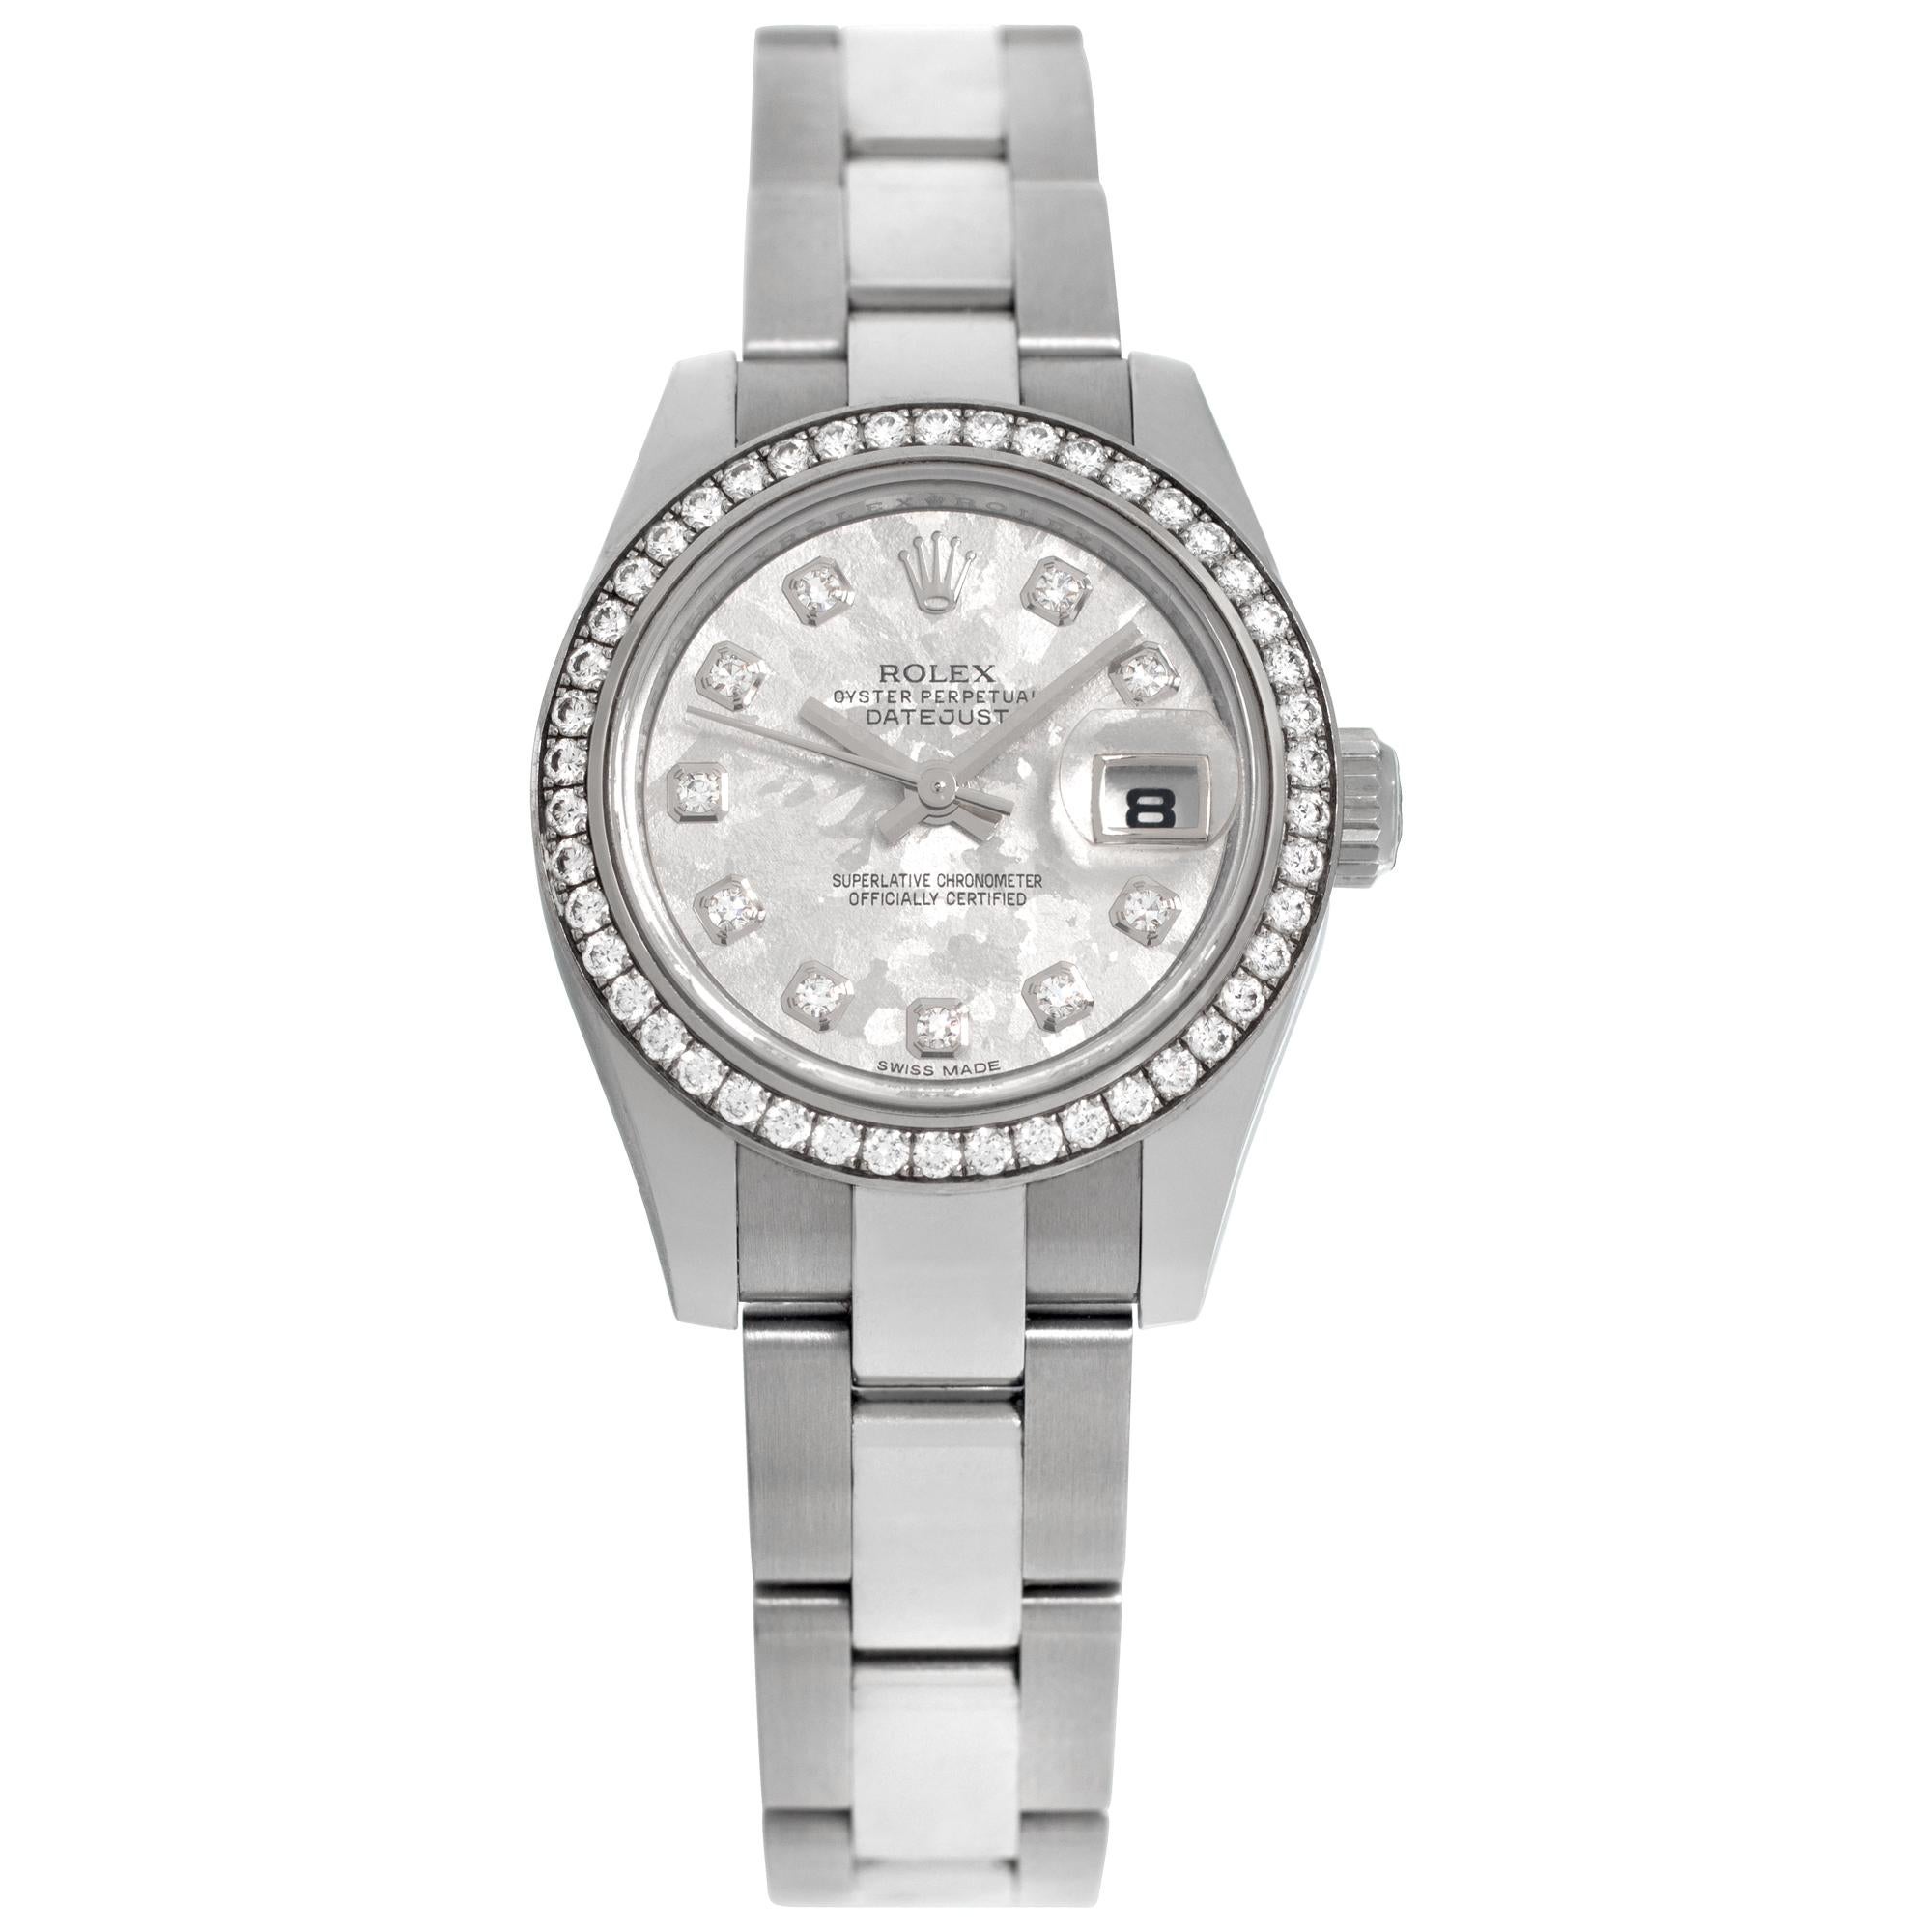 Rolex Datejust 18k white gold Automatic Wristwatch Ref 179384